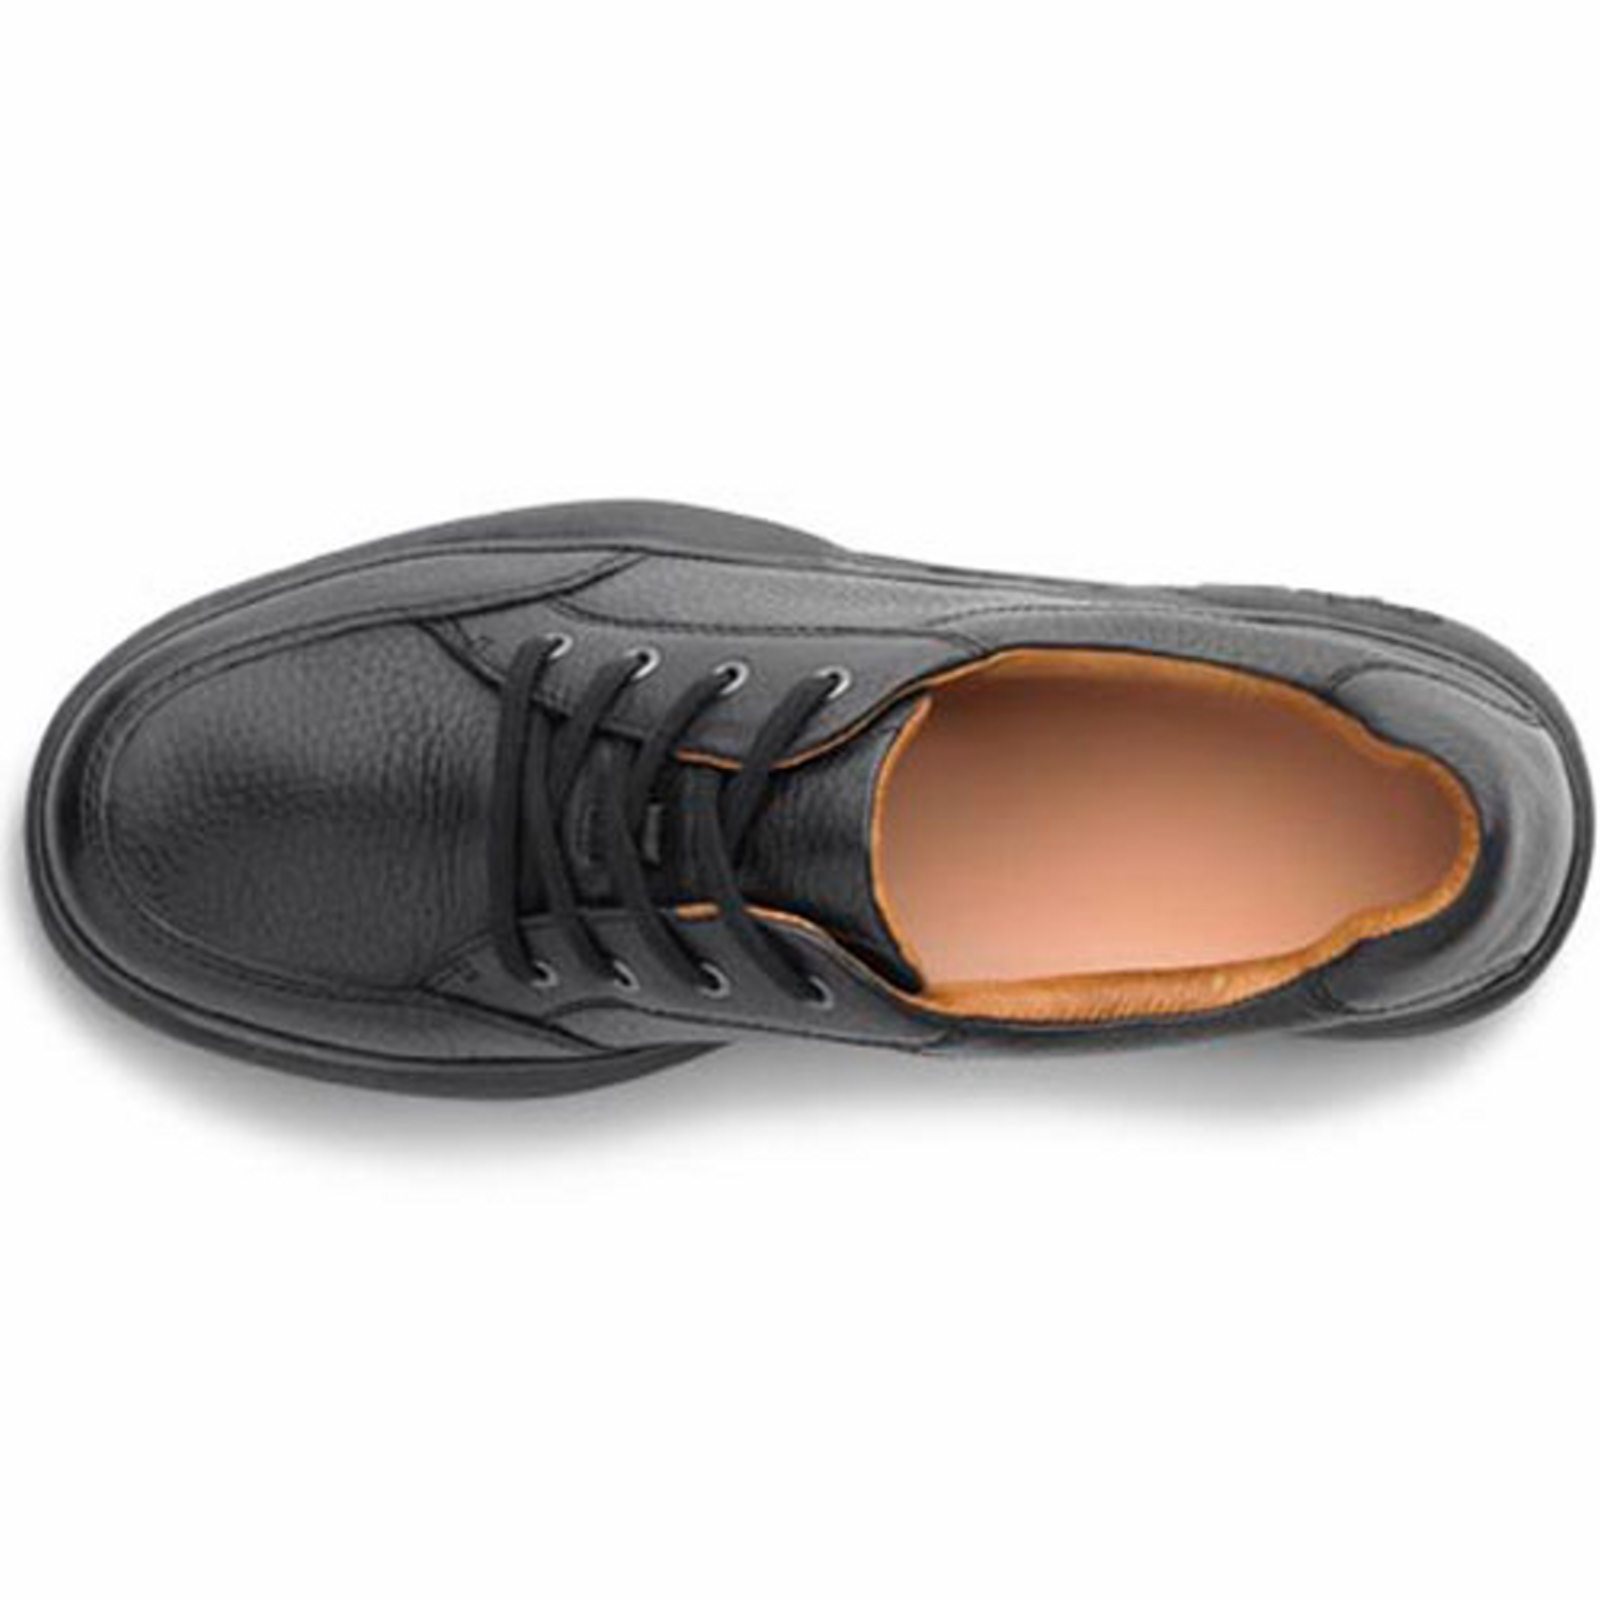 Dr. Comfort Justin Men's Casual Shoe: 14 Medium (B/D) Chestnut Suede Lace - image 4 of 4